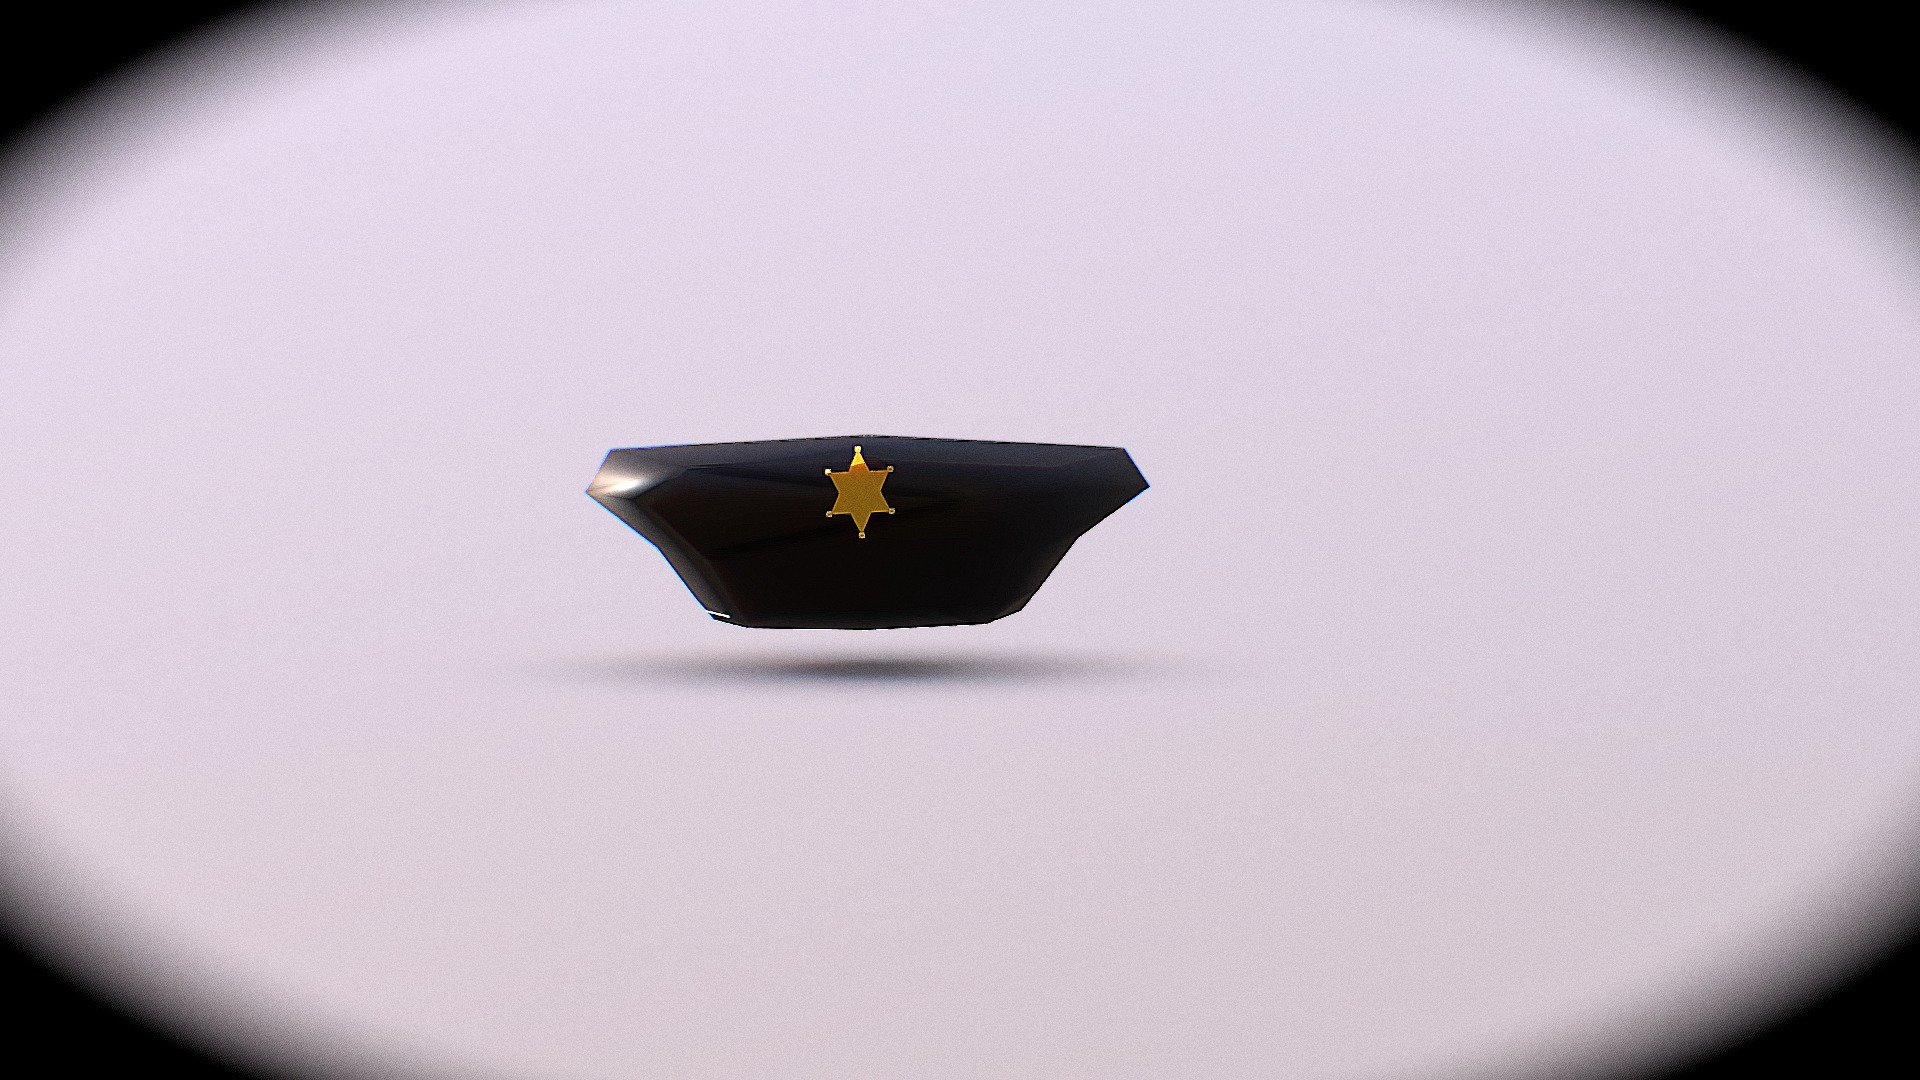 Lowpoly 3D Model of a Police Hat.
Made in: Blender 3d model